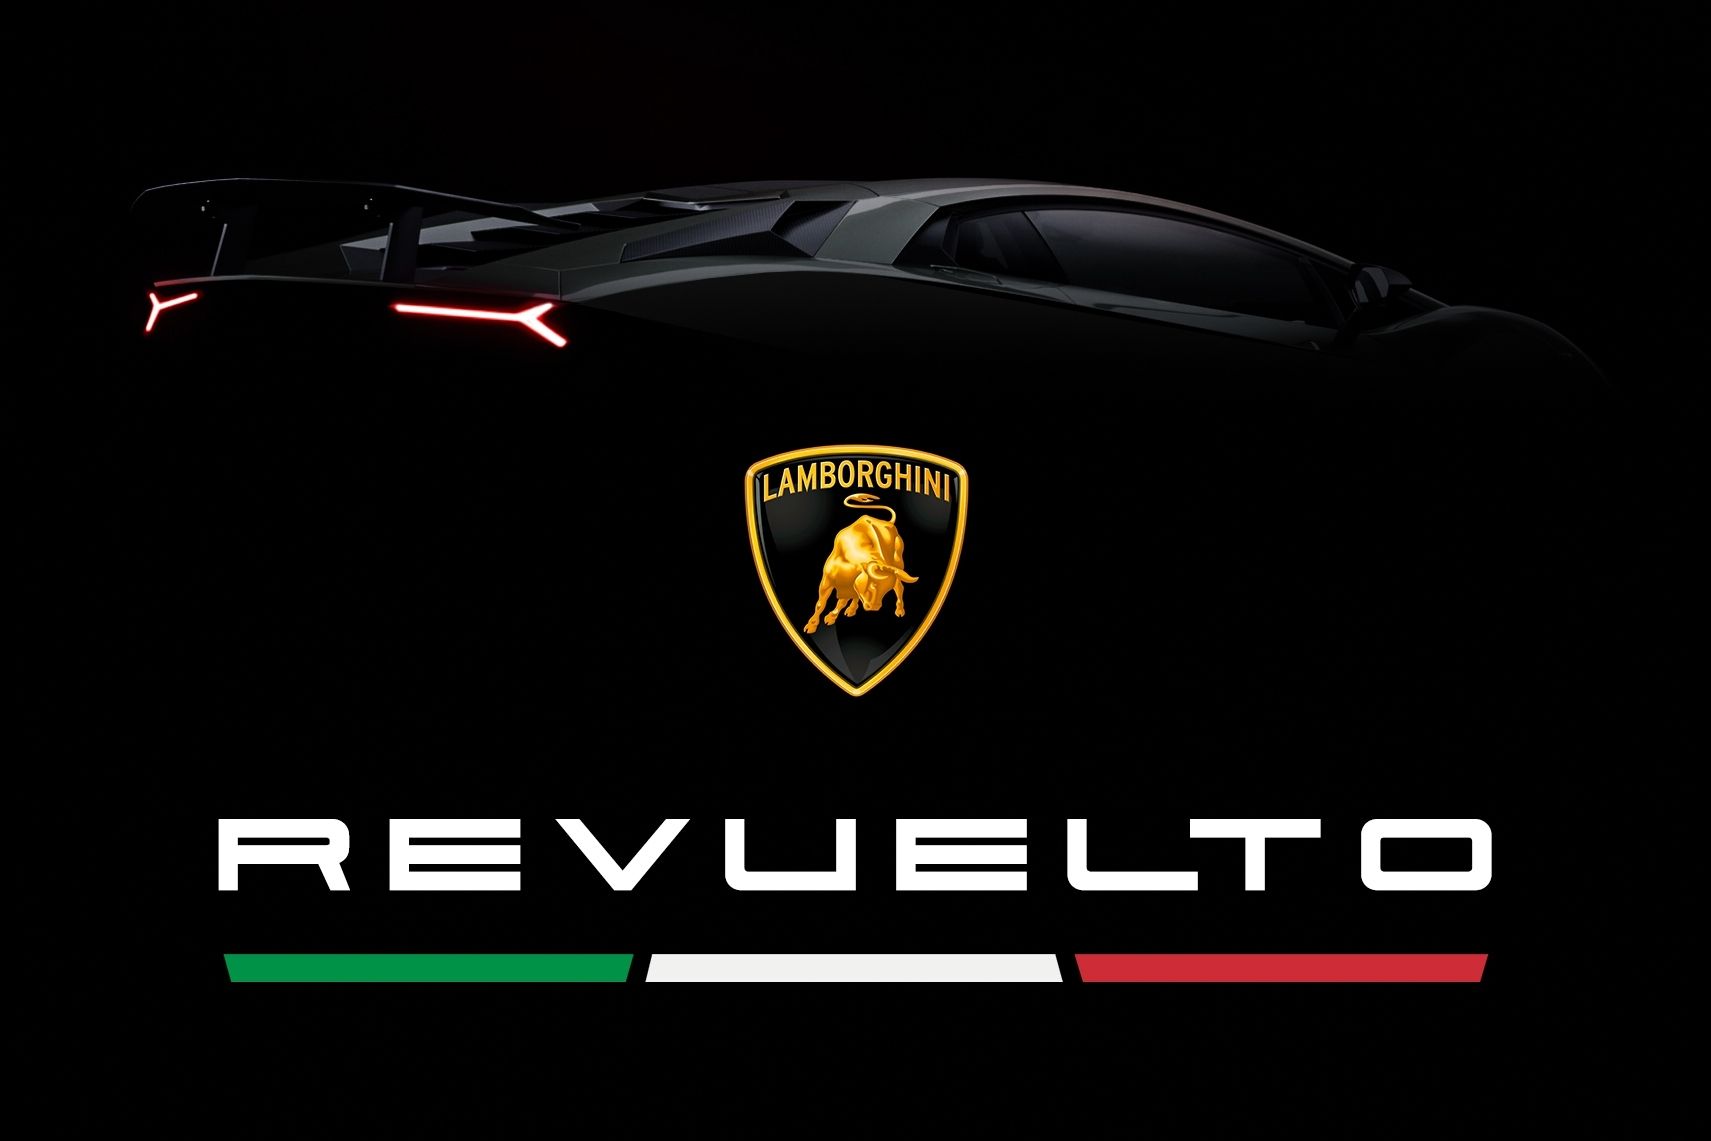 Download Lamborghini iPhone Silver Car With Logo Wallpaper | Wallpapers.com